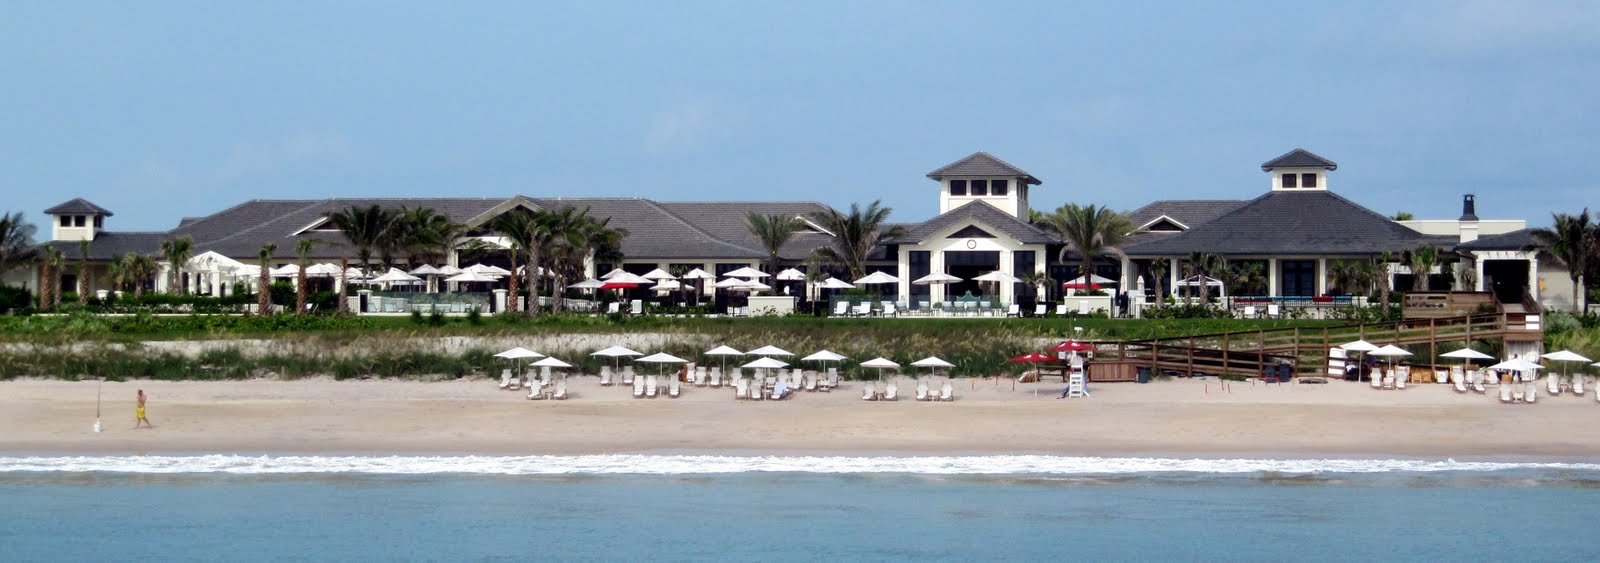 Vero Beach Luxury Real Estate: Vero Beach: John's Island